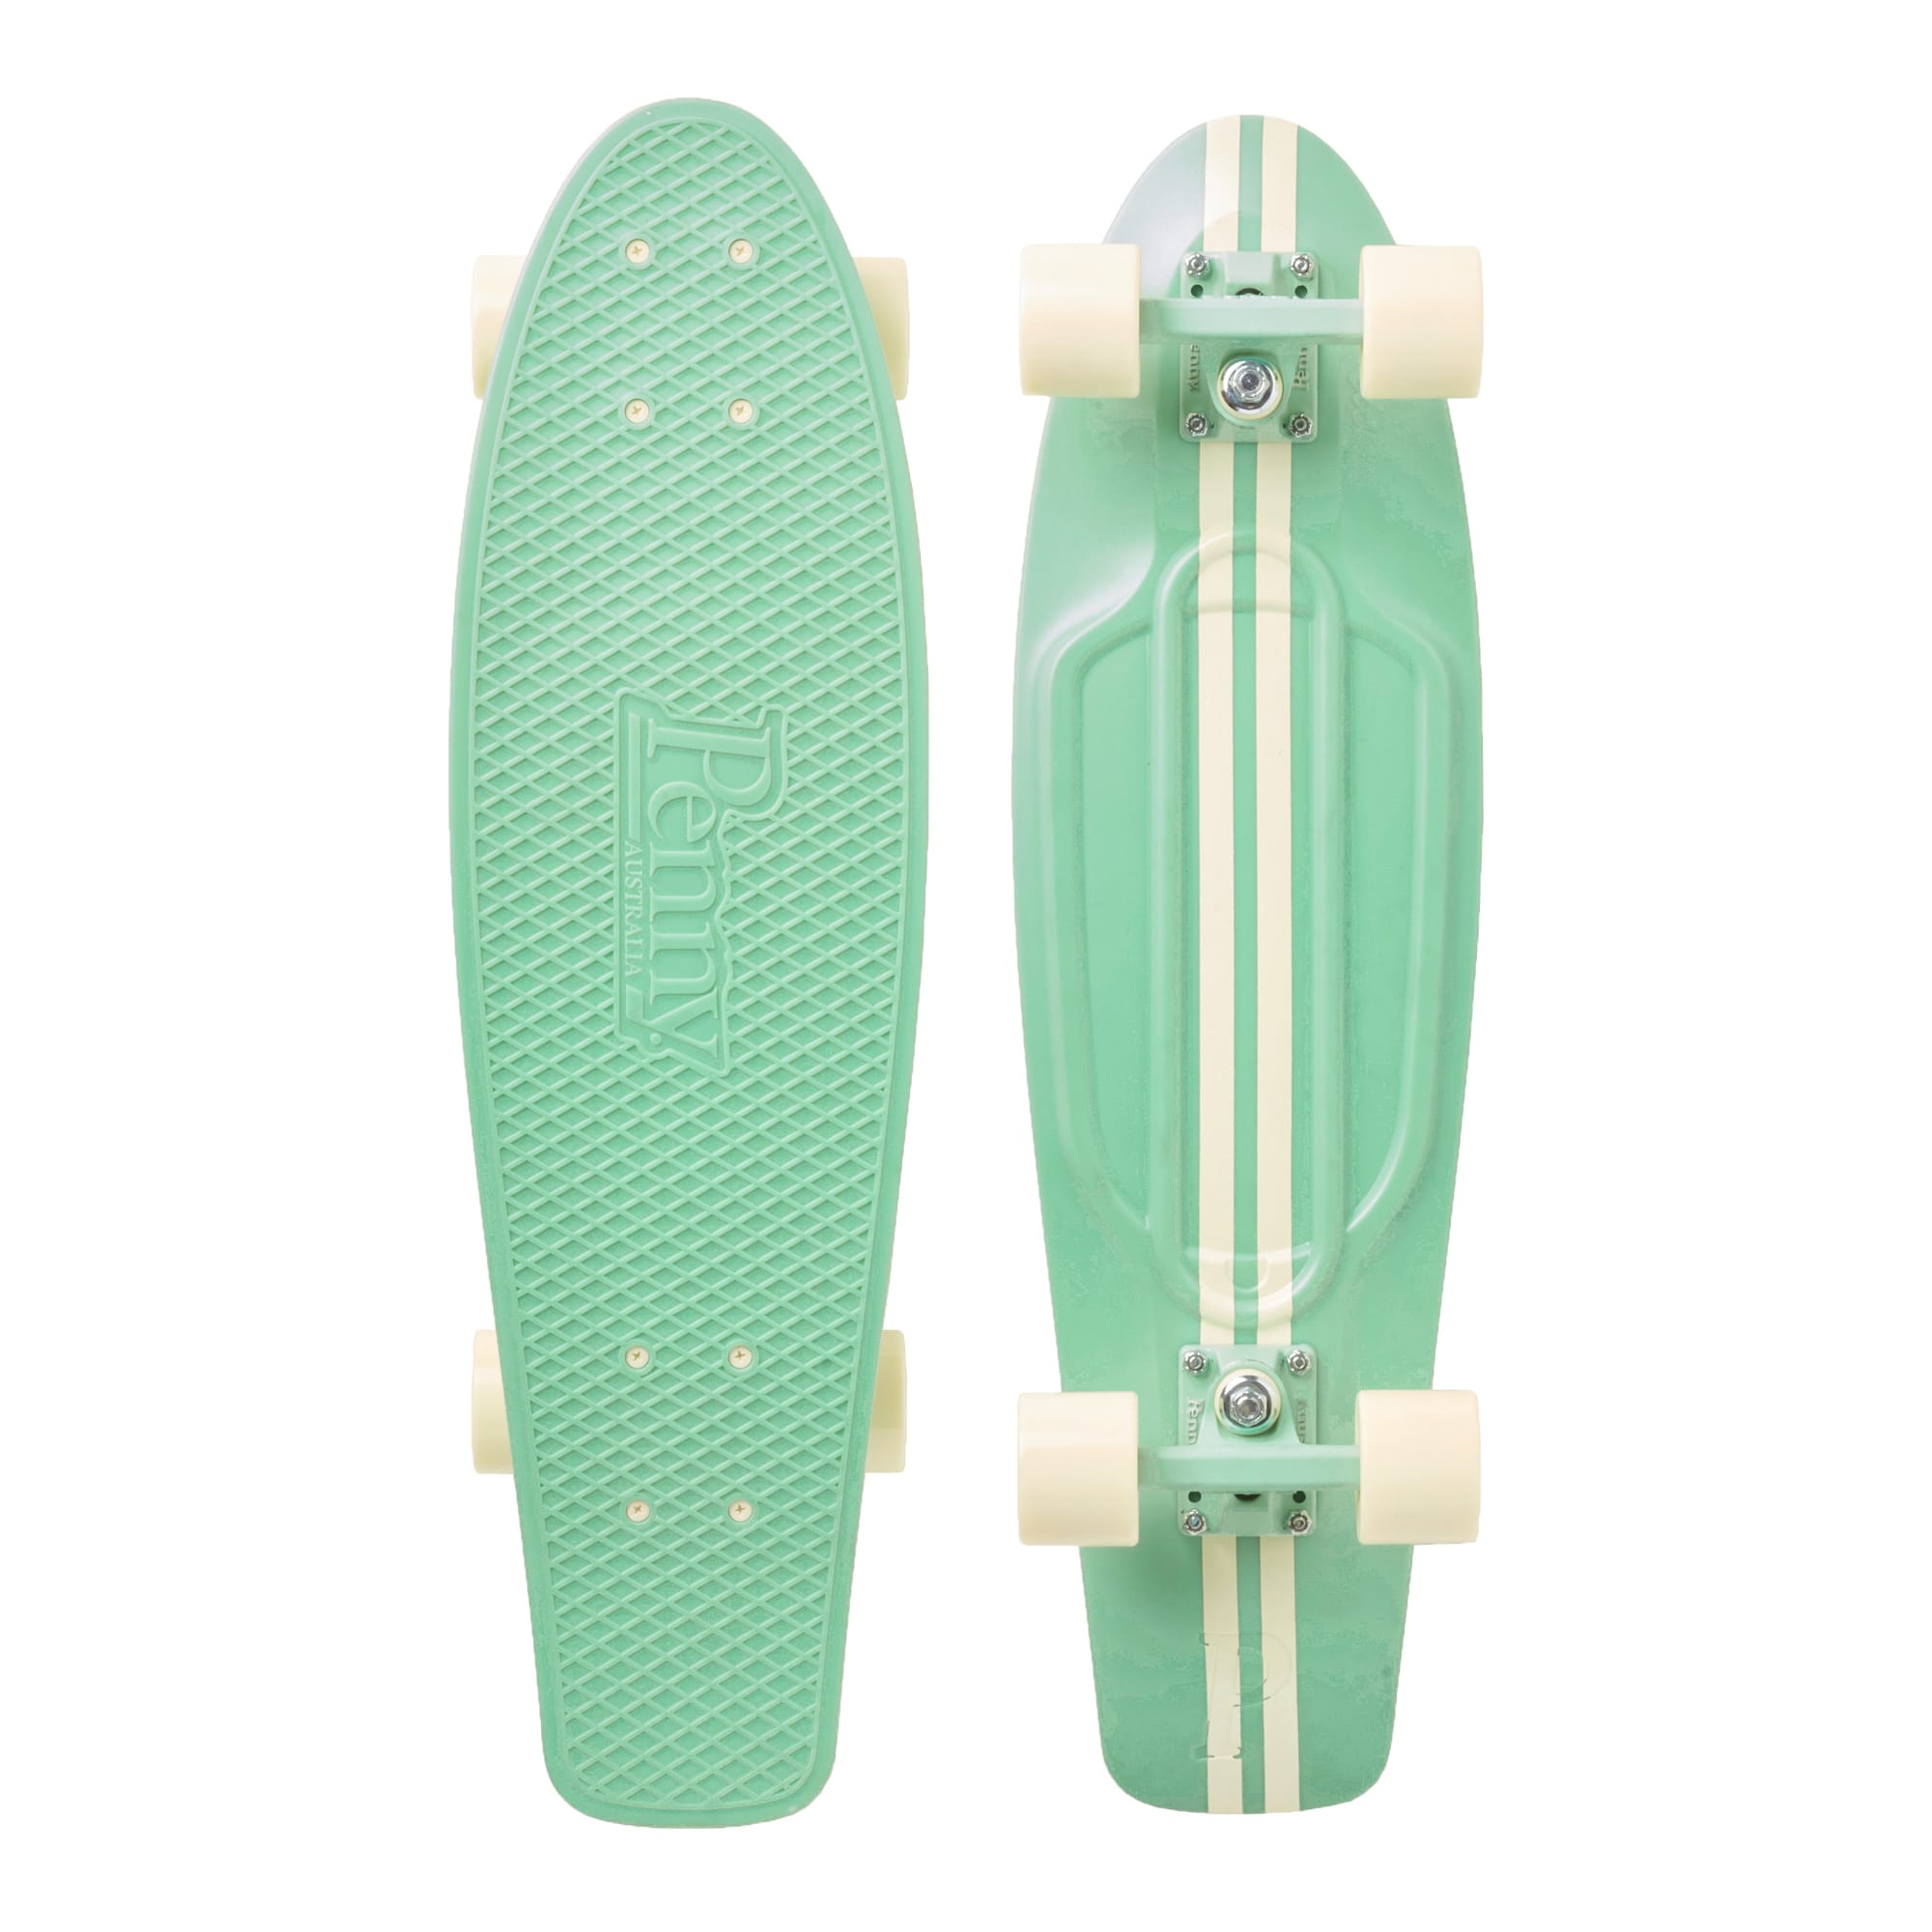 Stringer 27" Complete Cruiser Skateboard by Skateboards | Penny Board